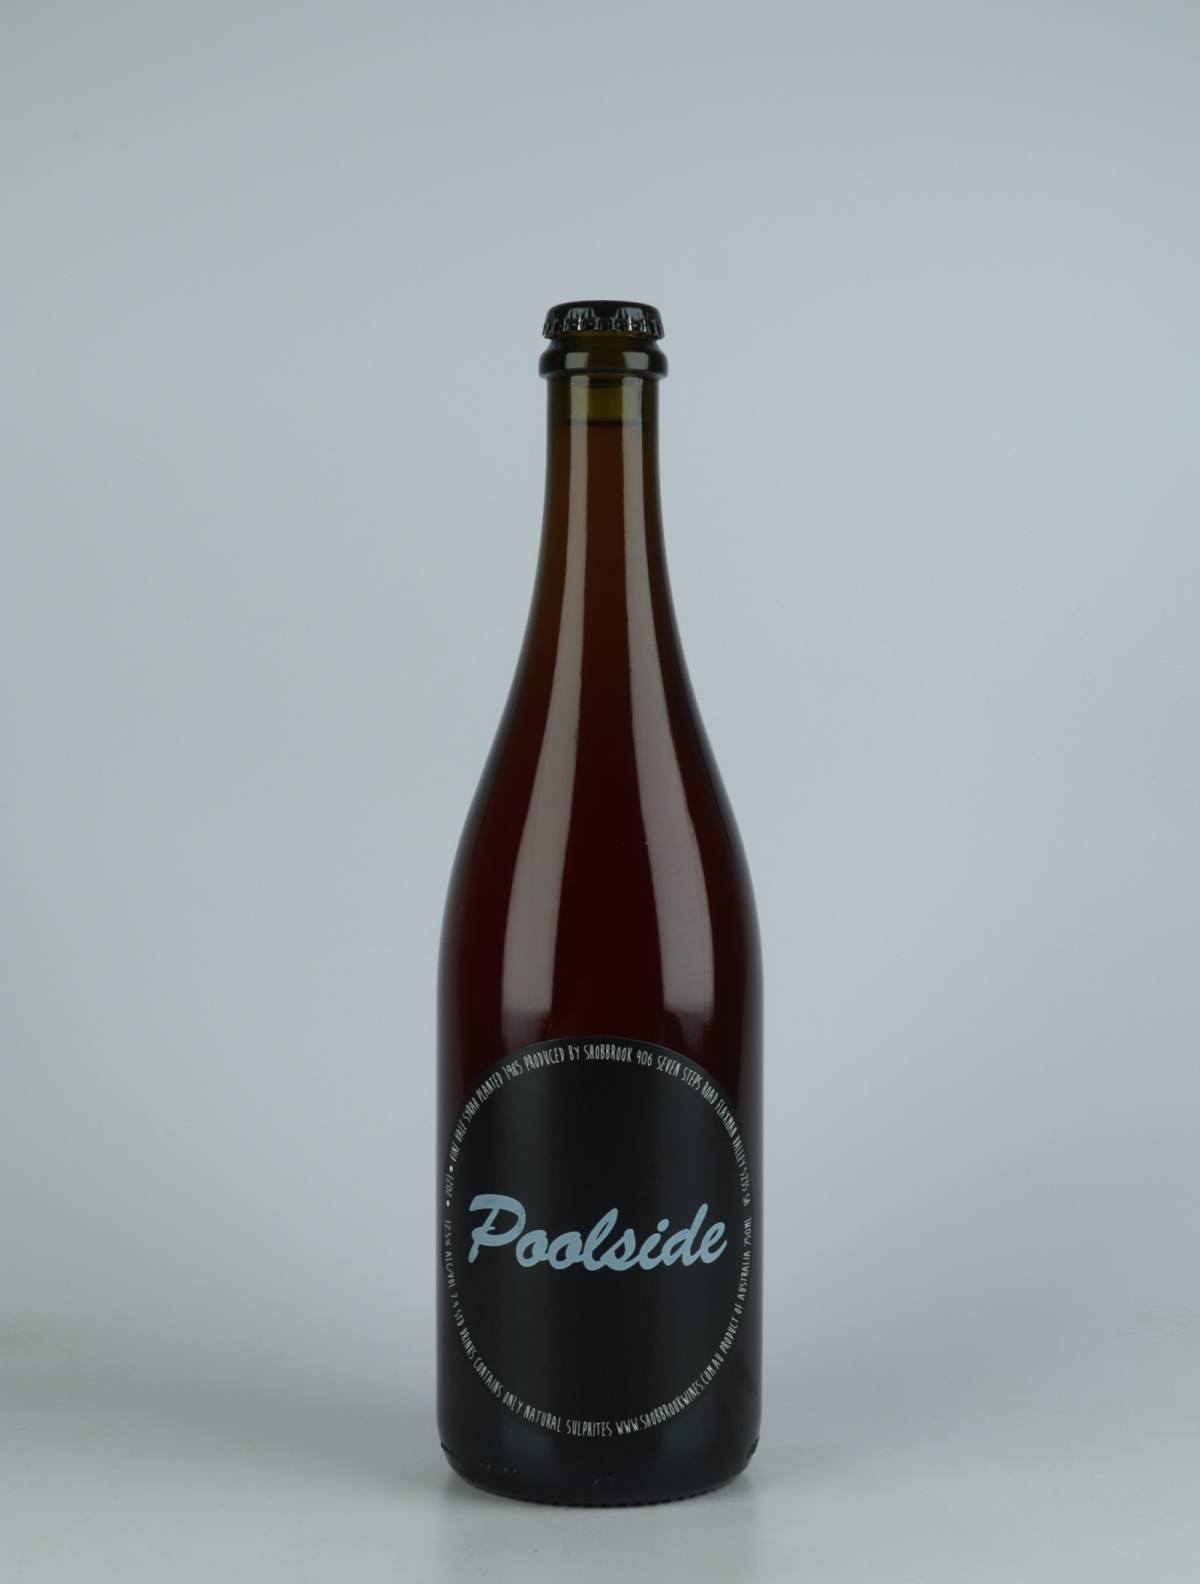 A bottle 2021 Poolside Rosé from Tom Shobbrook, Adelaide Hills in Australia